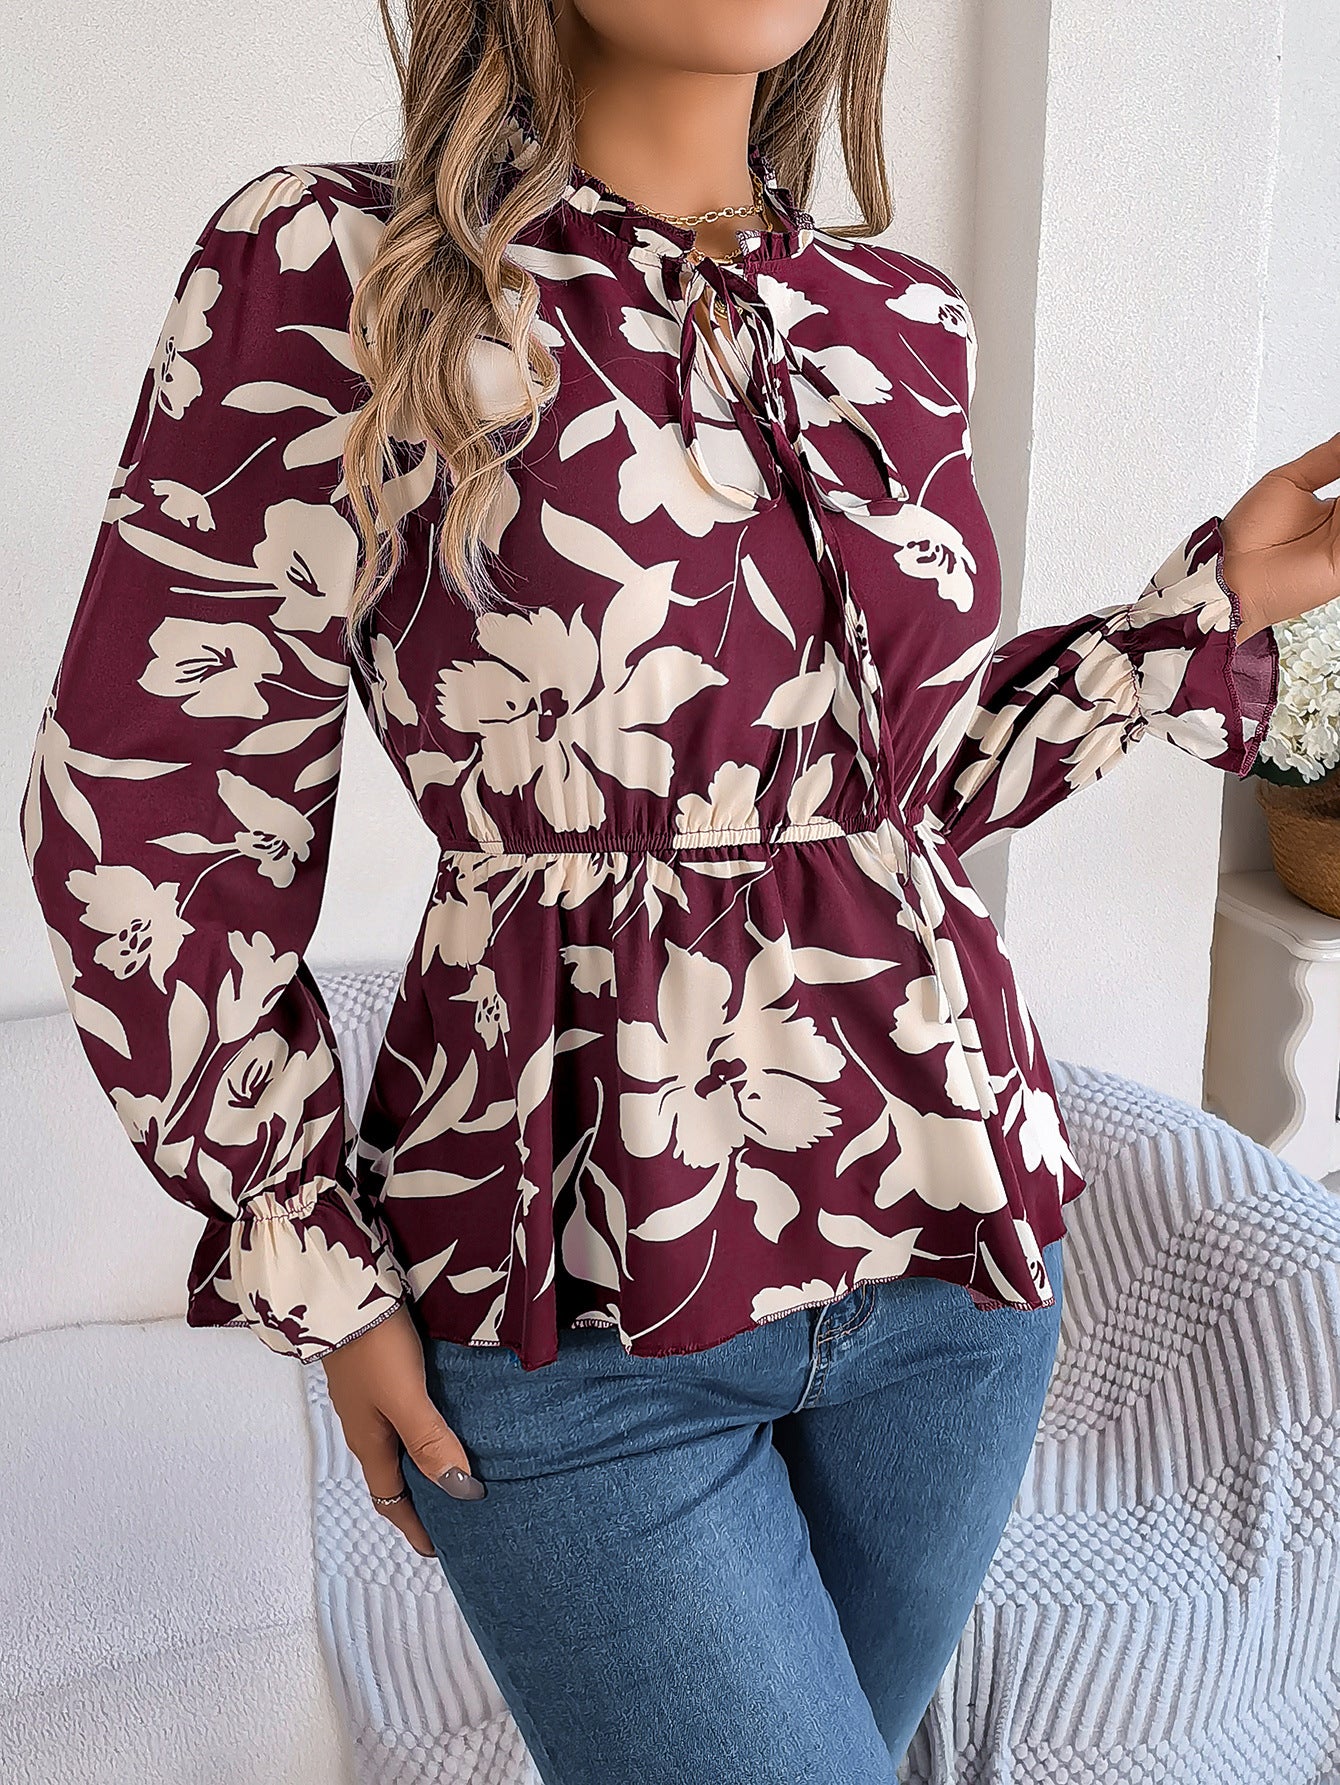 FZ Women's Casual Floral Lace up Long Sleeve Chiffon Work Shirt Top